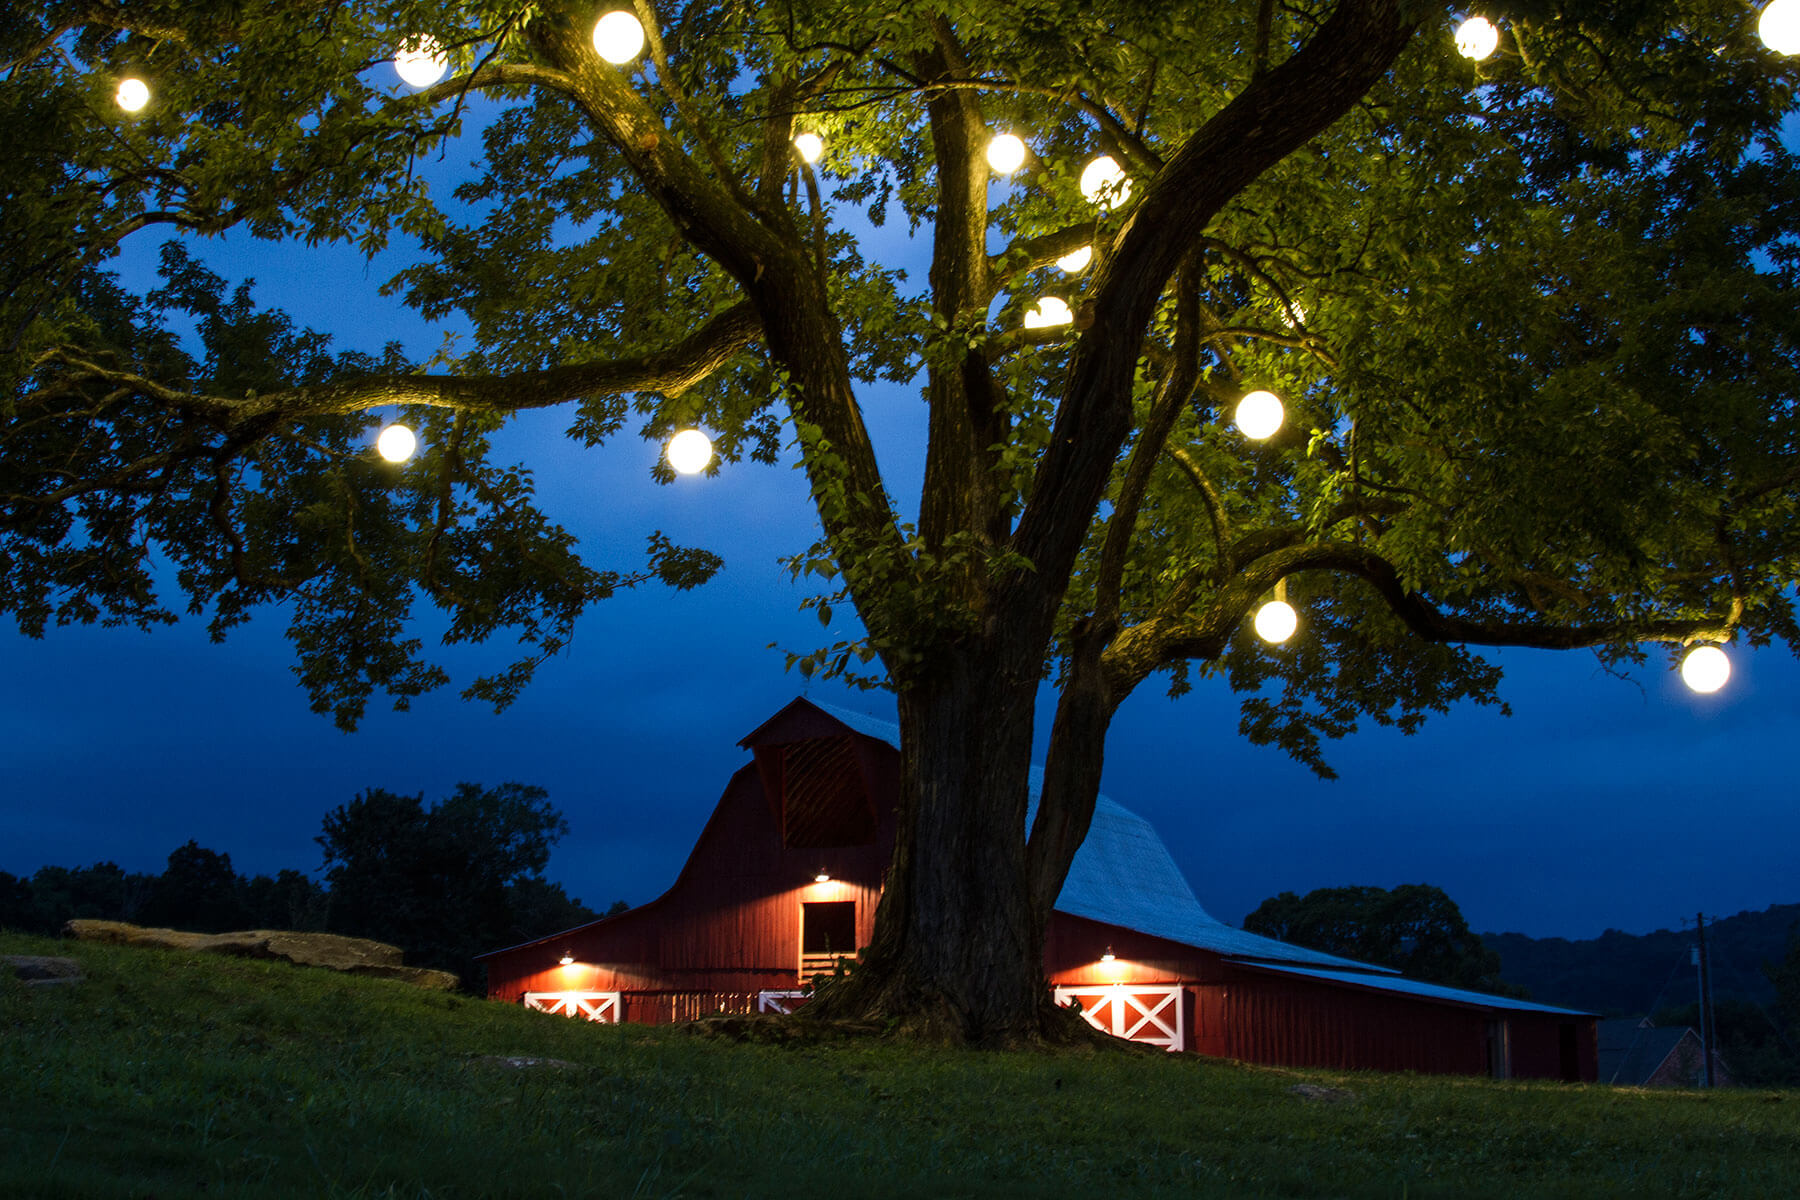 Lights hung on a tree near a barn